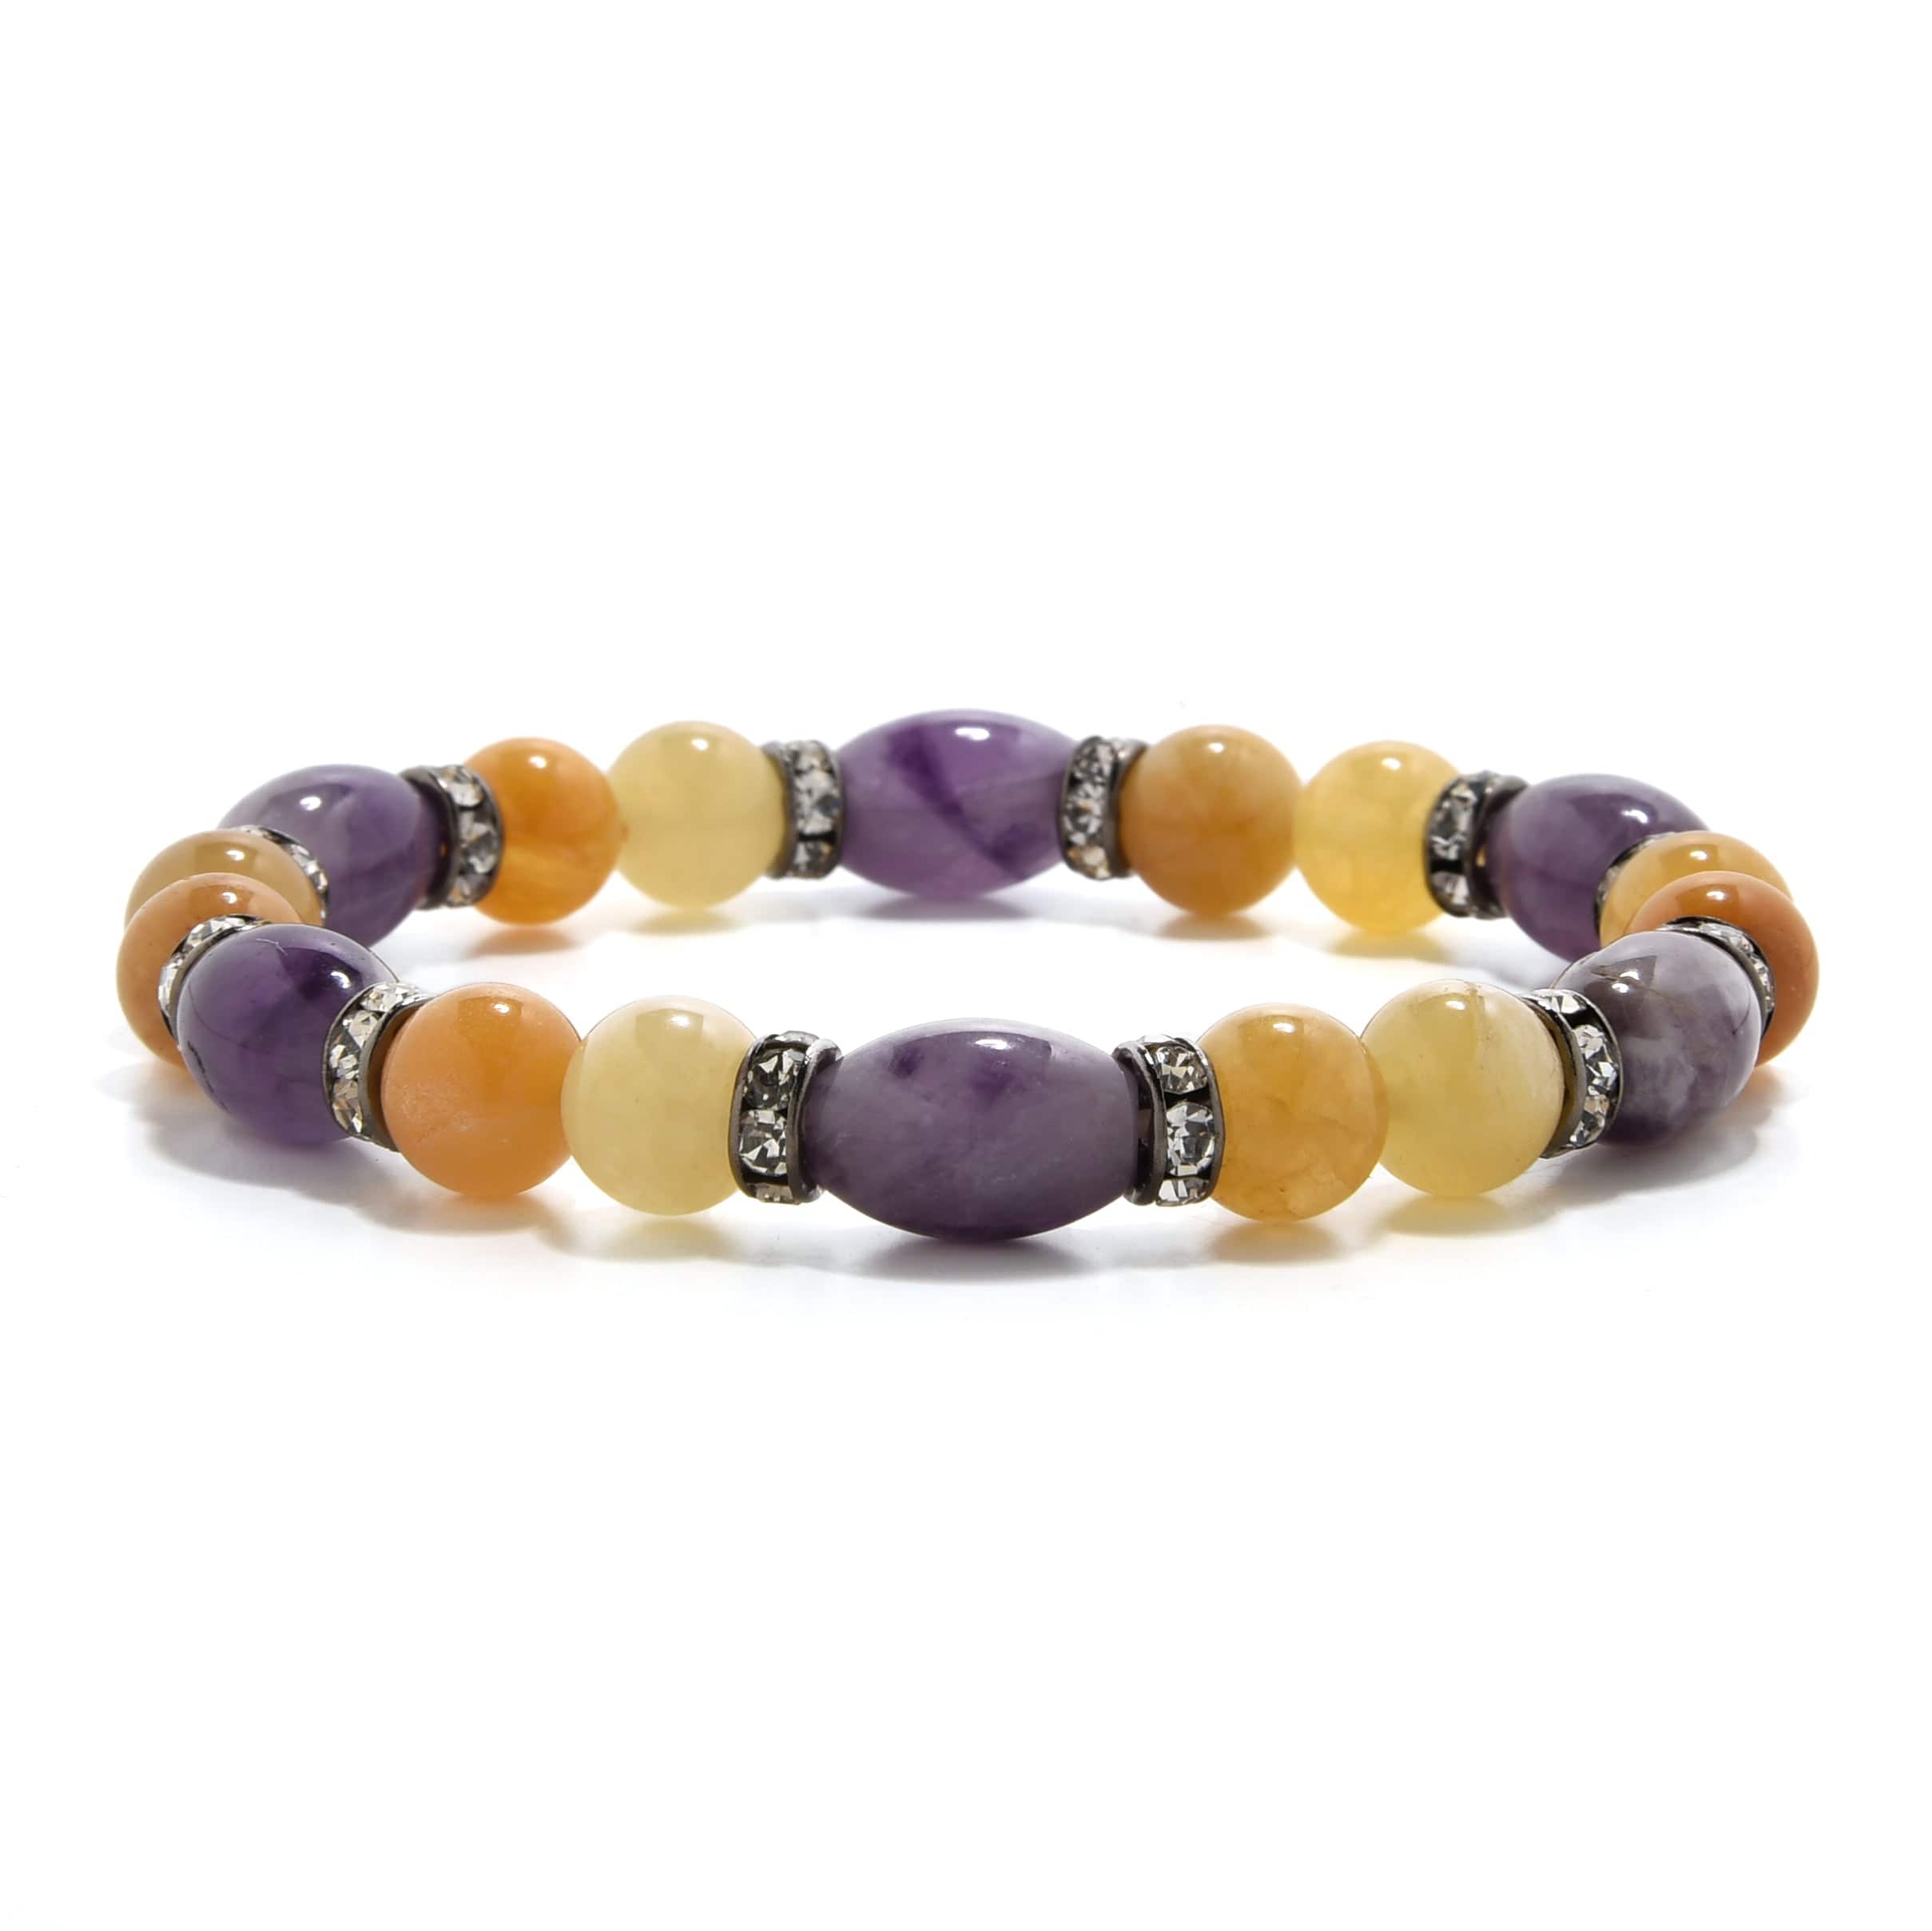 Kalifano Gemstone Bracelets Amethyst and Yellow Jade with Crystal Accent 8mm Beads Gemstone Elastic Bracelet BLUE-BGP-062